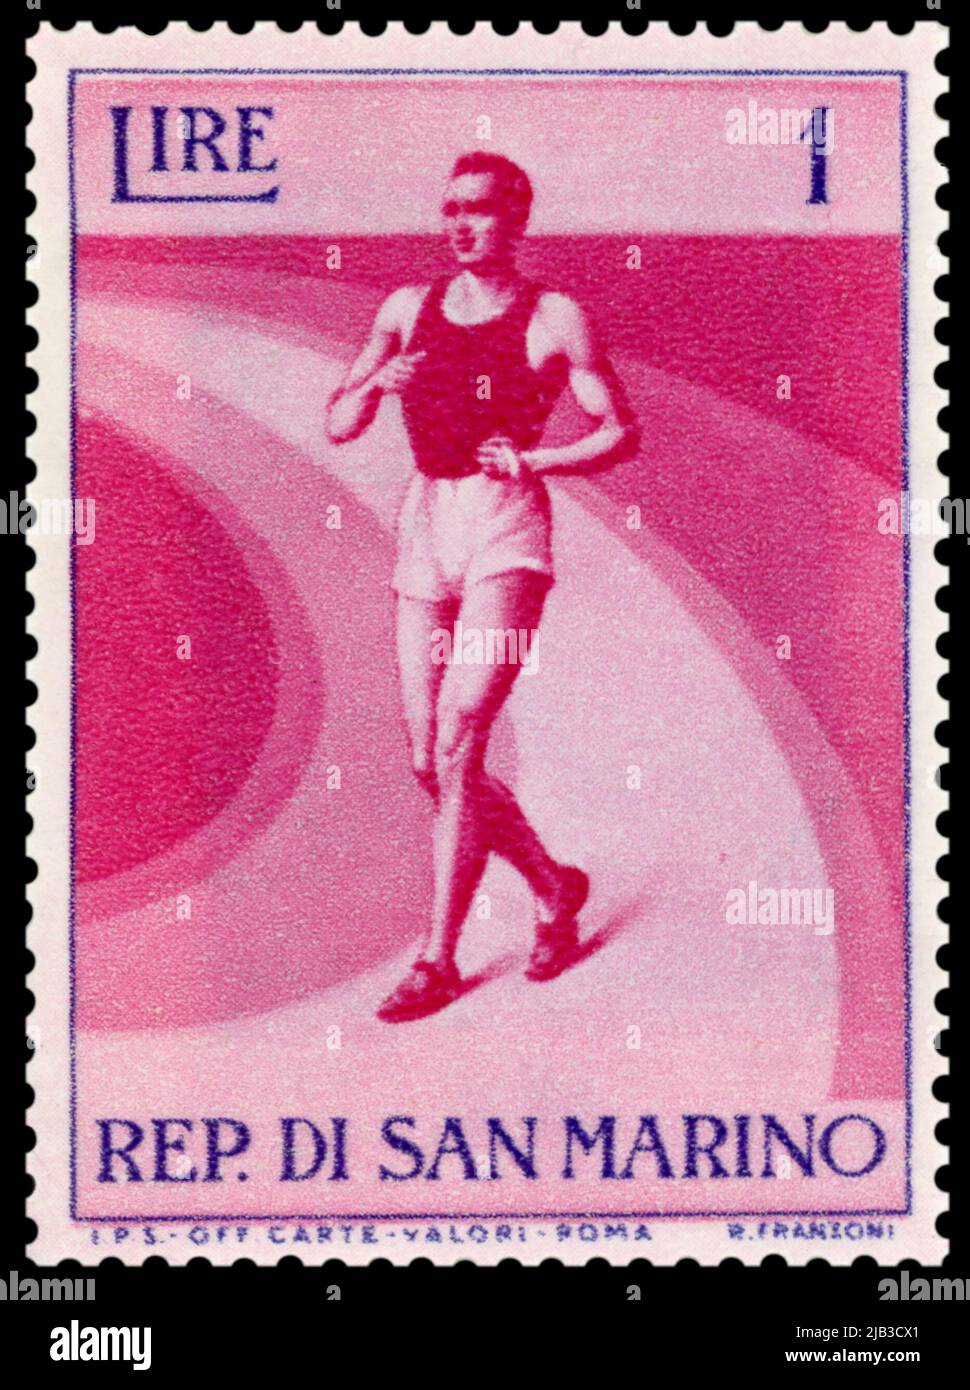 Racewalking featured on a 1954 San Marino postage stamp. Stock Photo